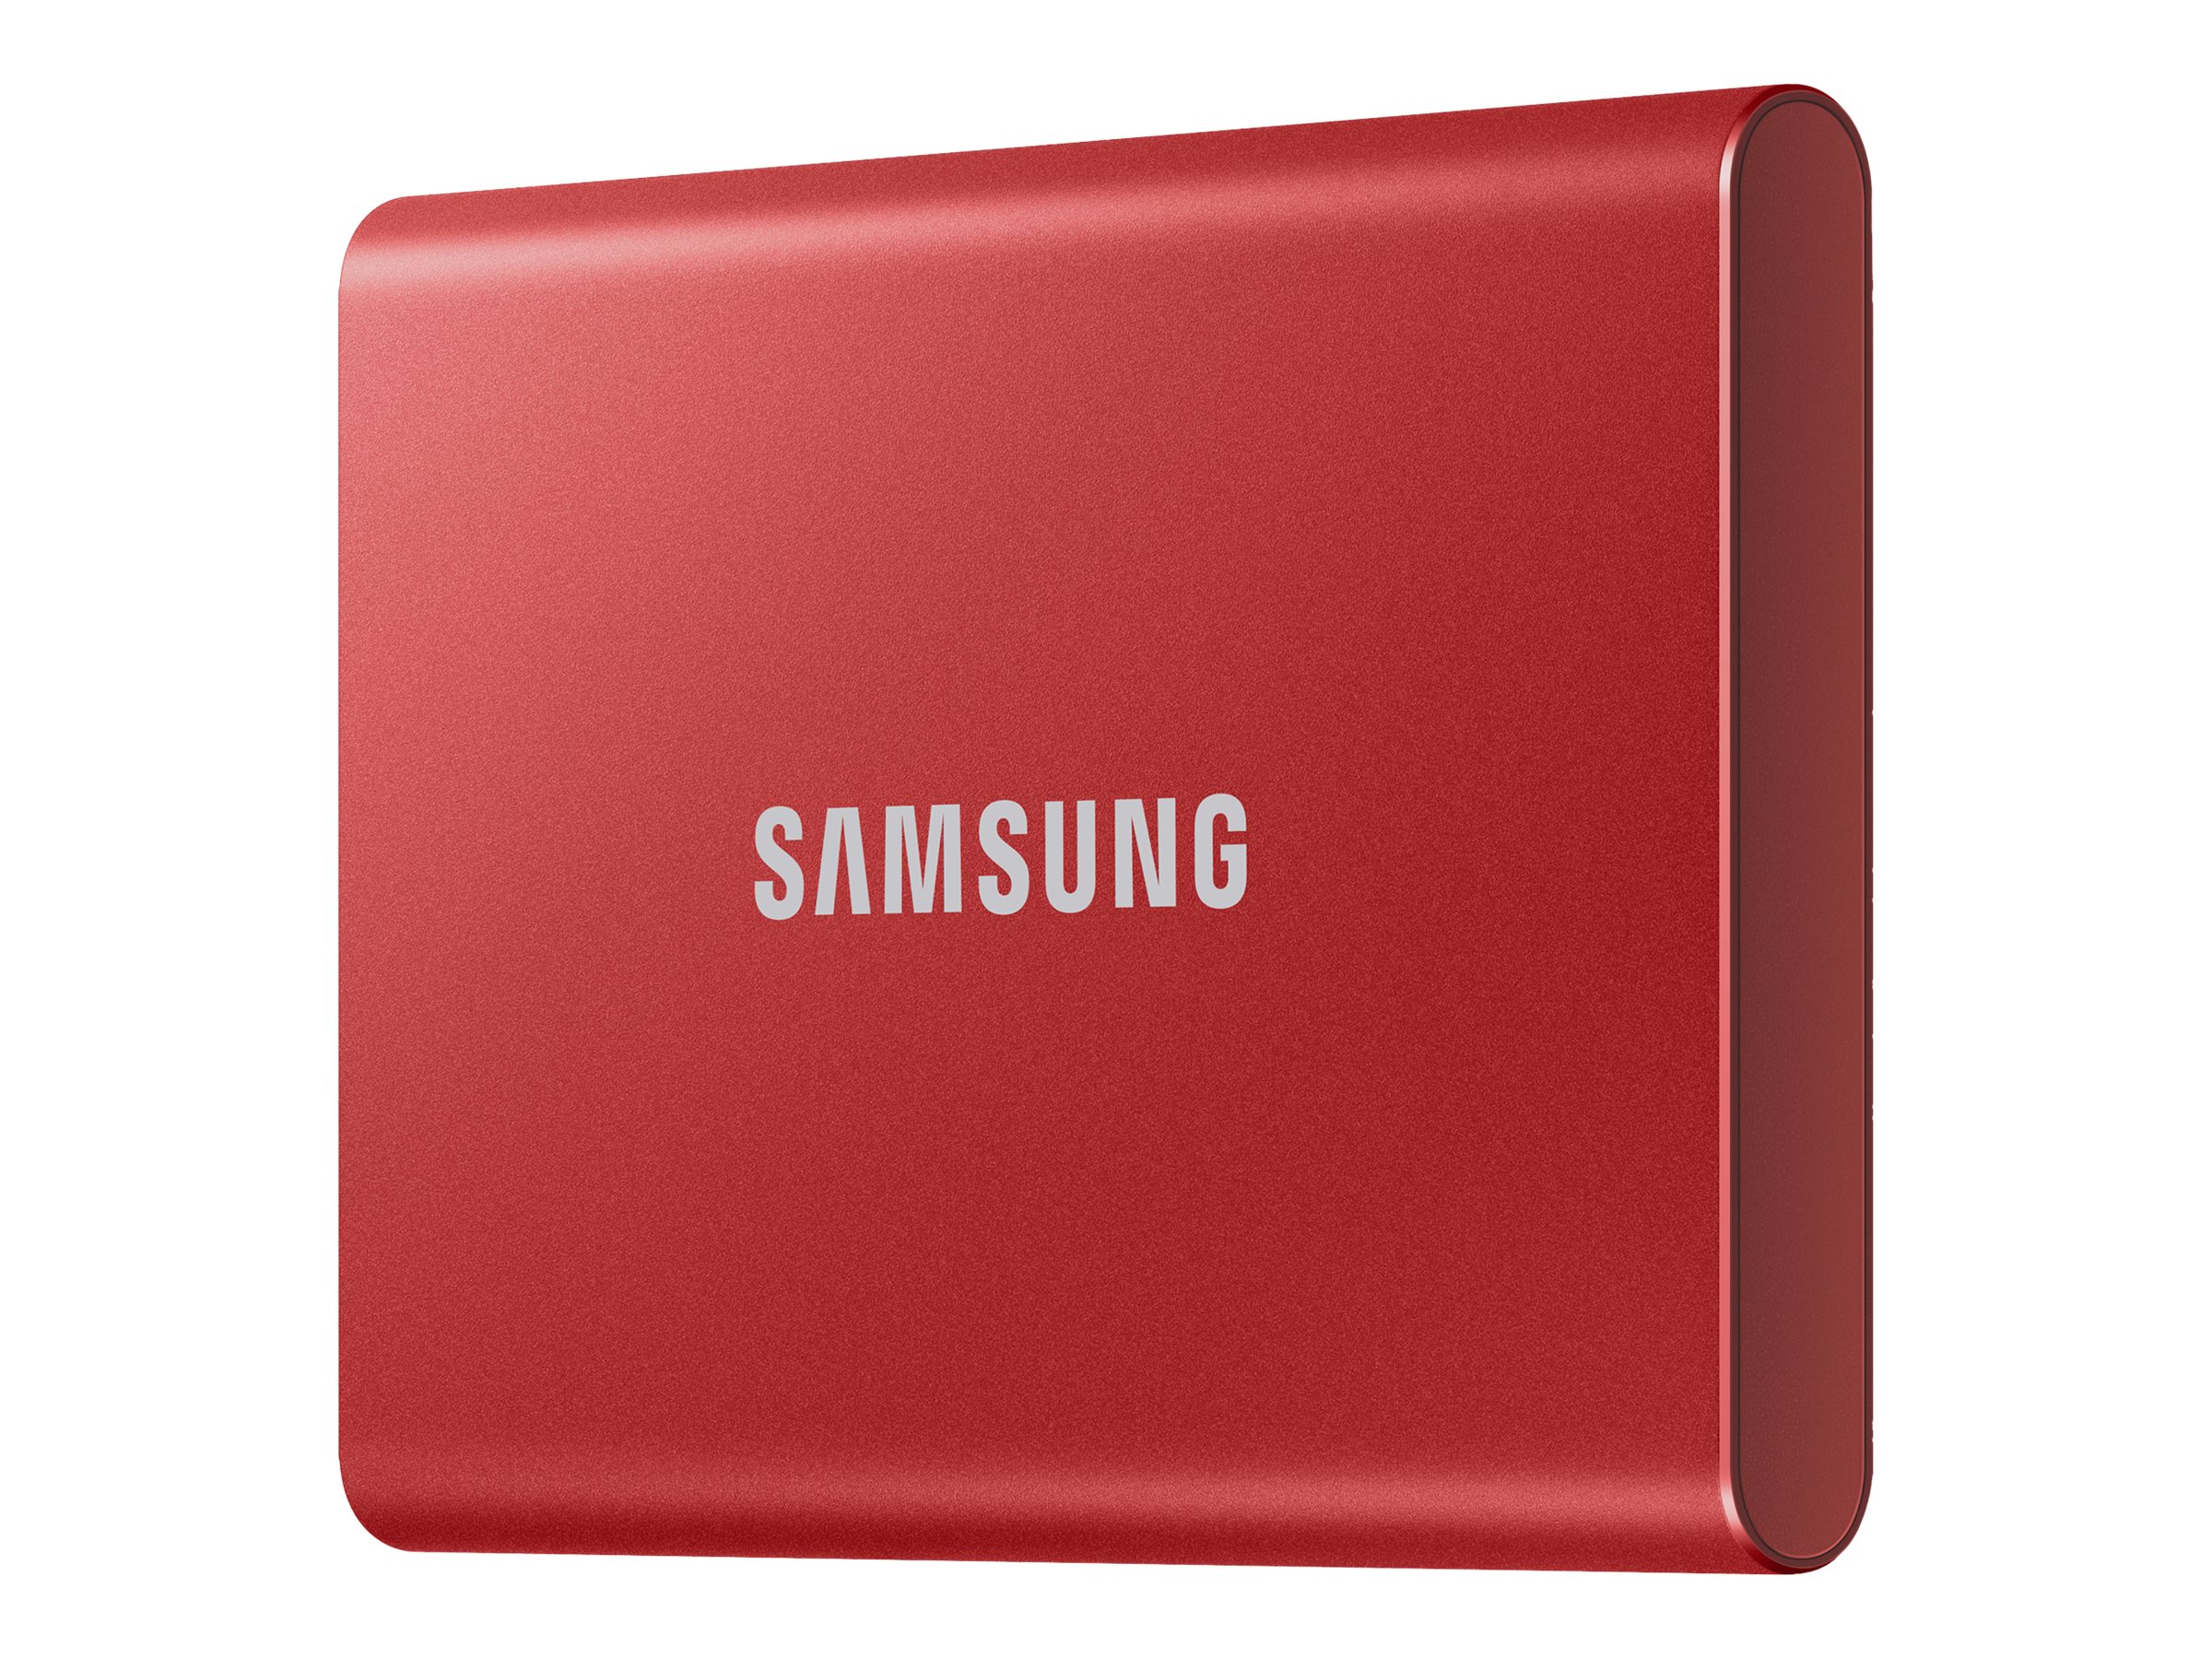 SAMSUNG SSD PORTABLE T7 500GB metallic red